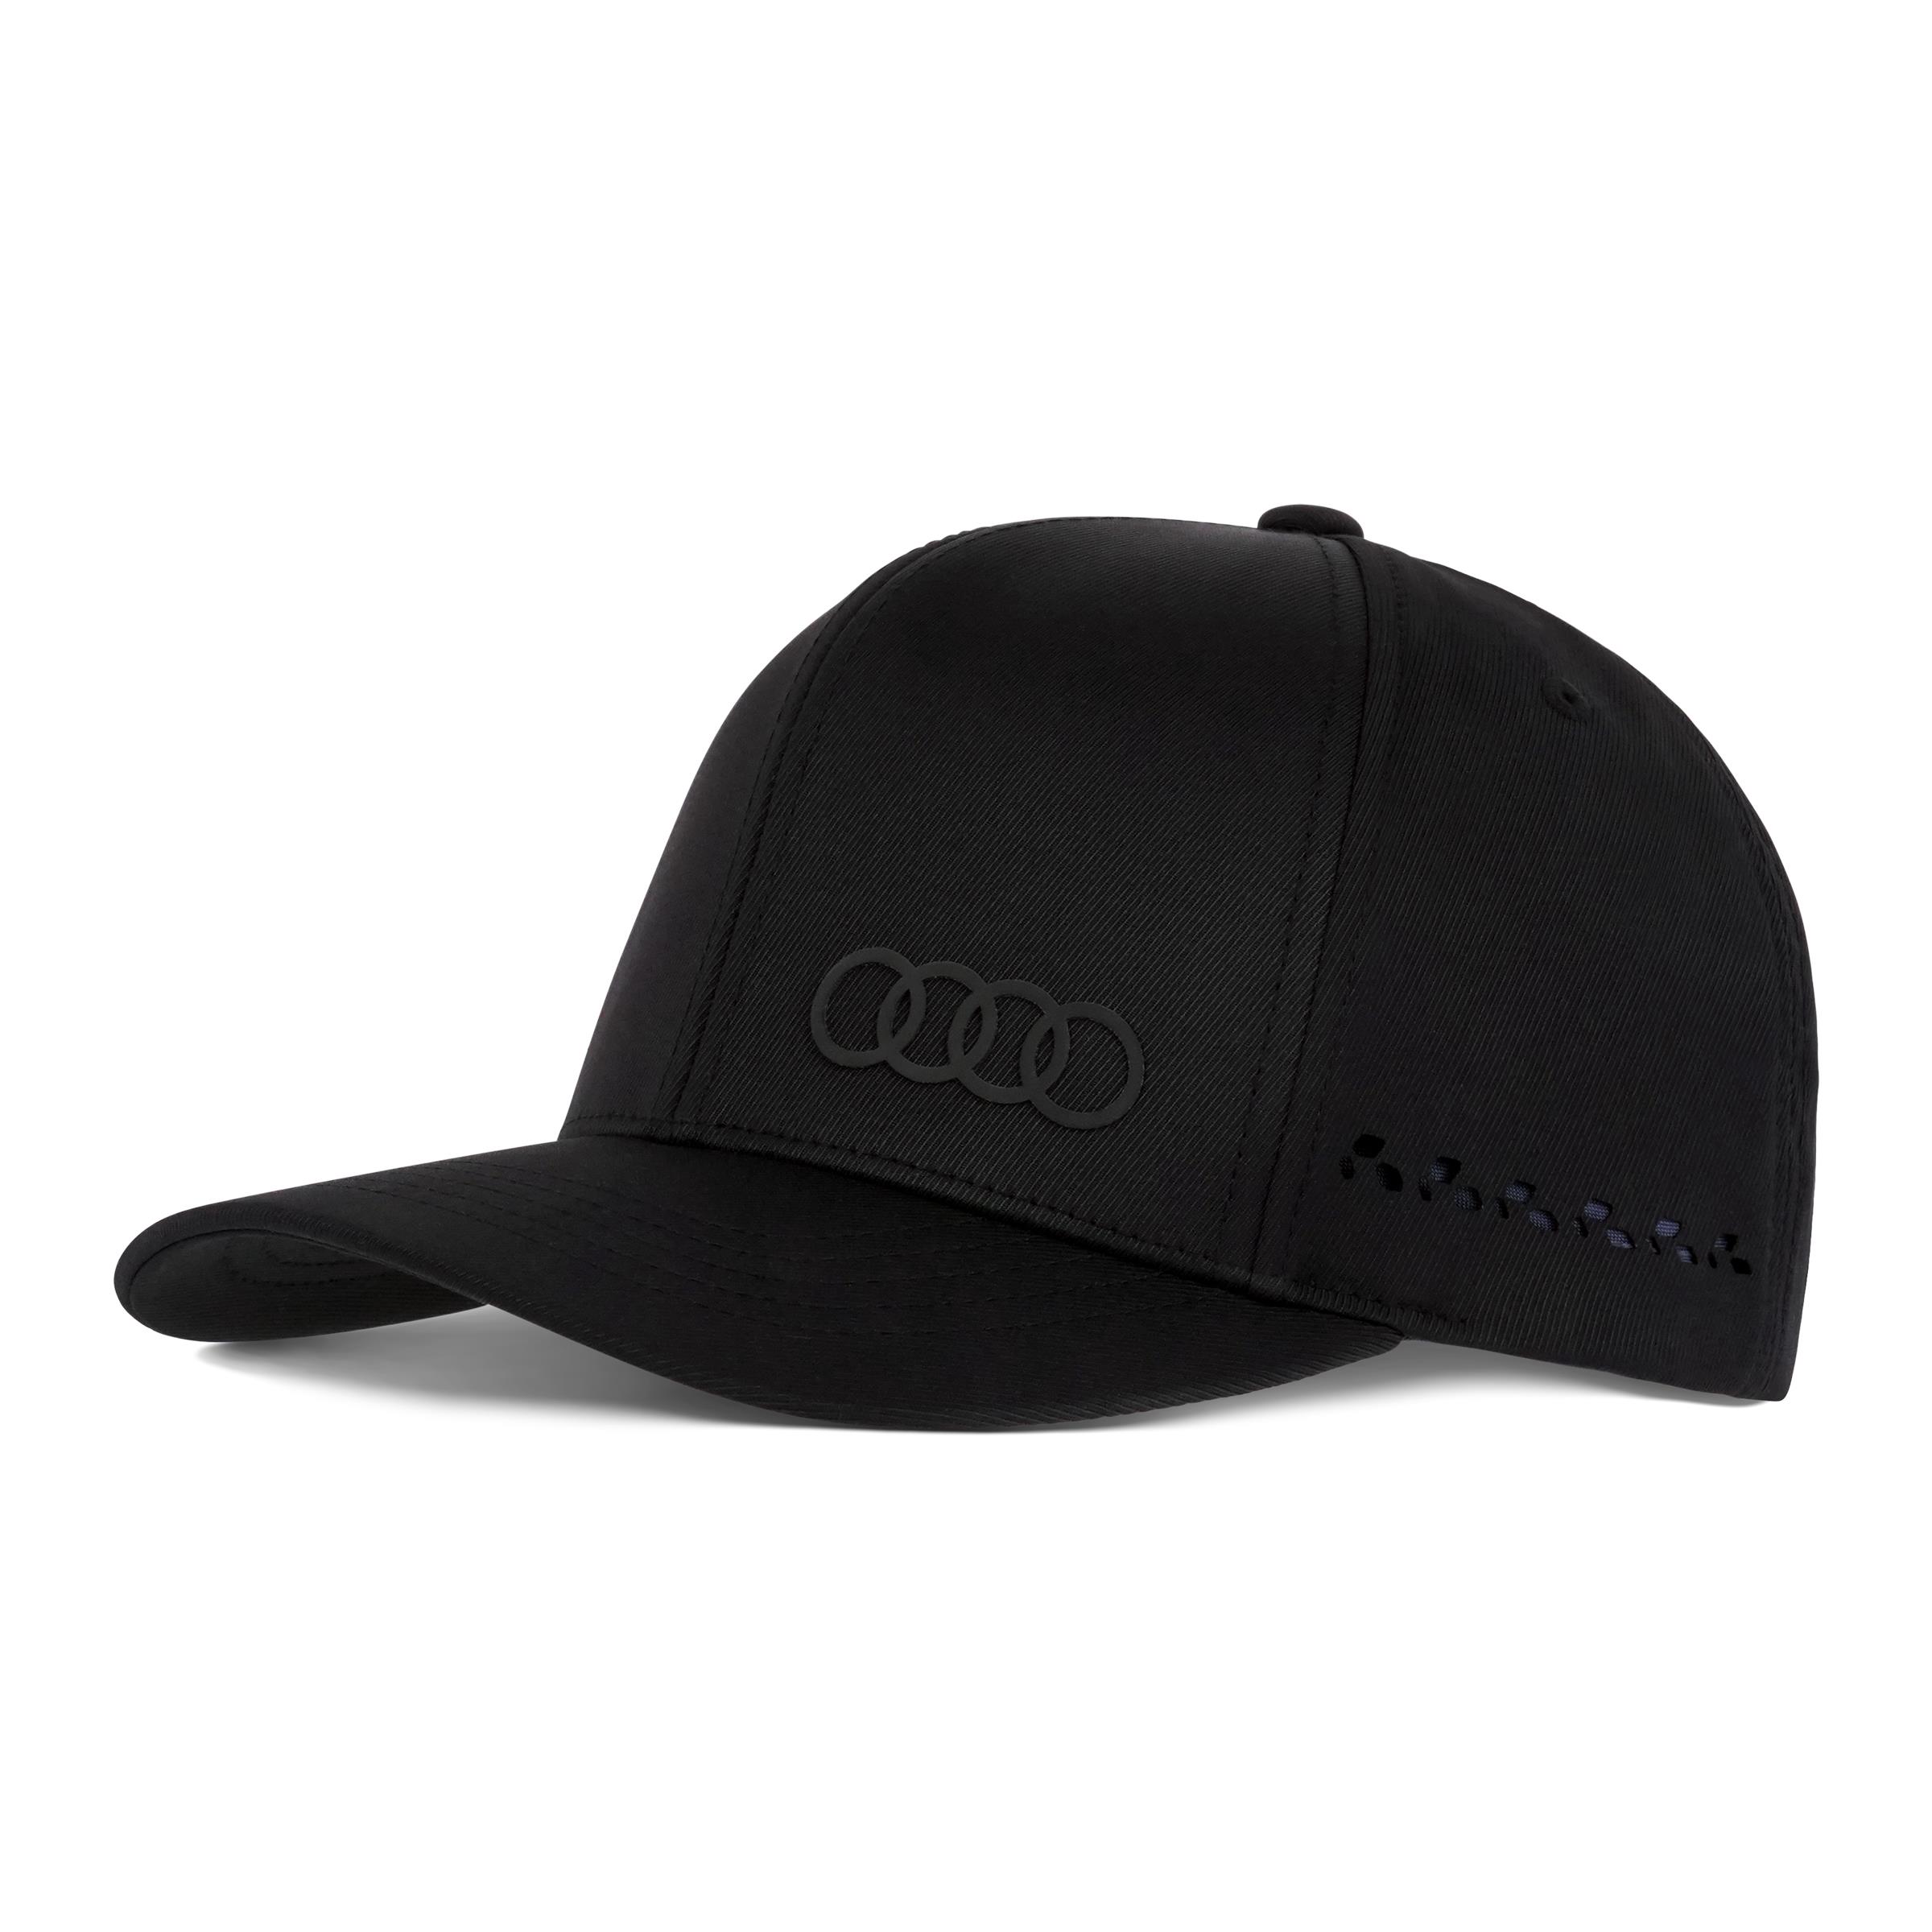 Original Audi Tec-Cap, schwarz B-Ware OVP fehlt Baseballkappe Baseballcap Kappe